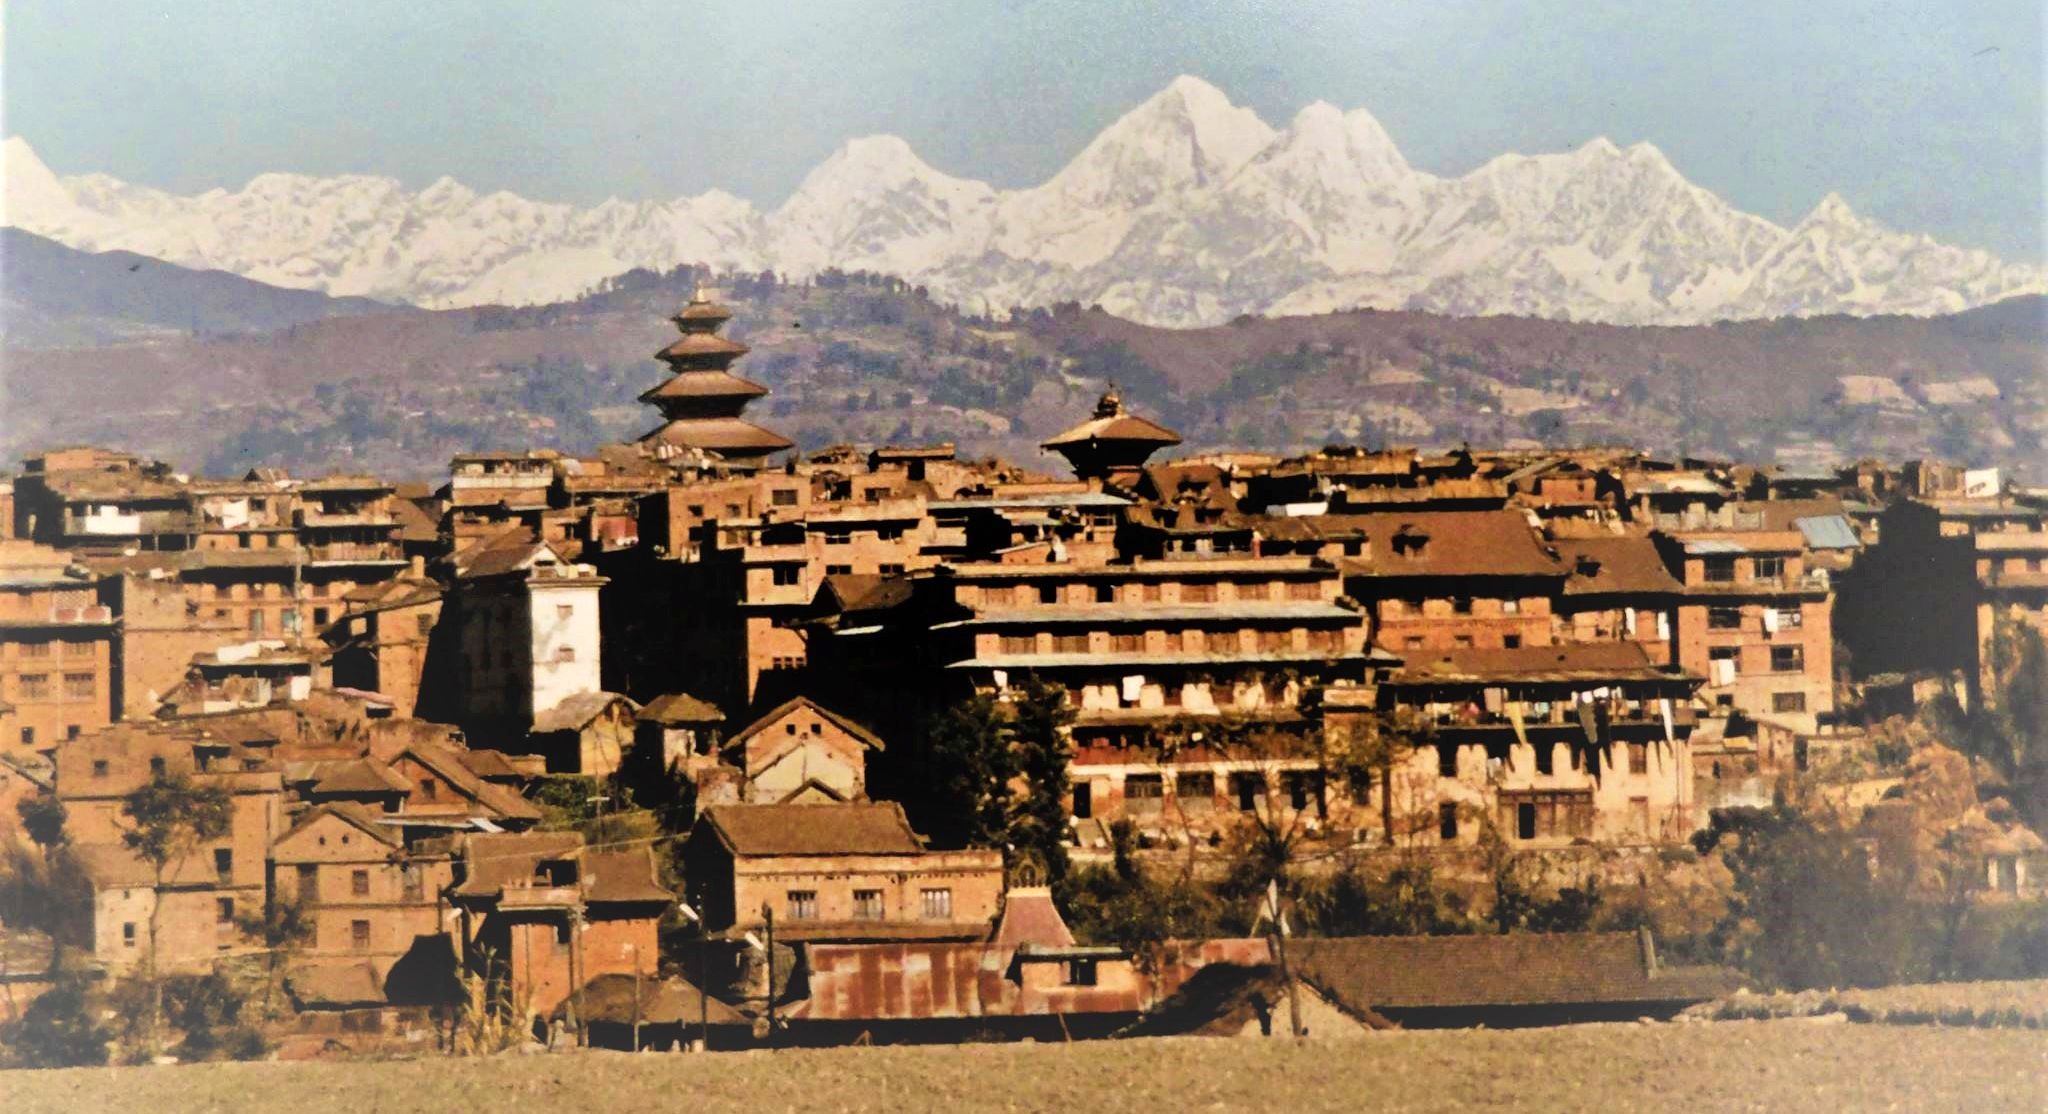 Jugal Himal from Bhaktapur